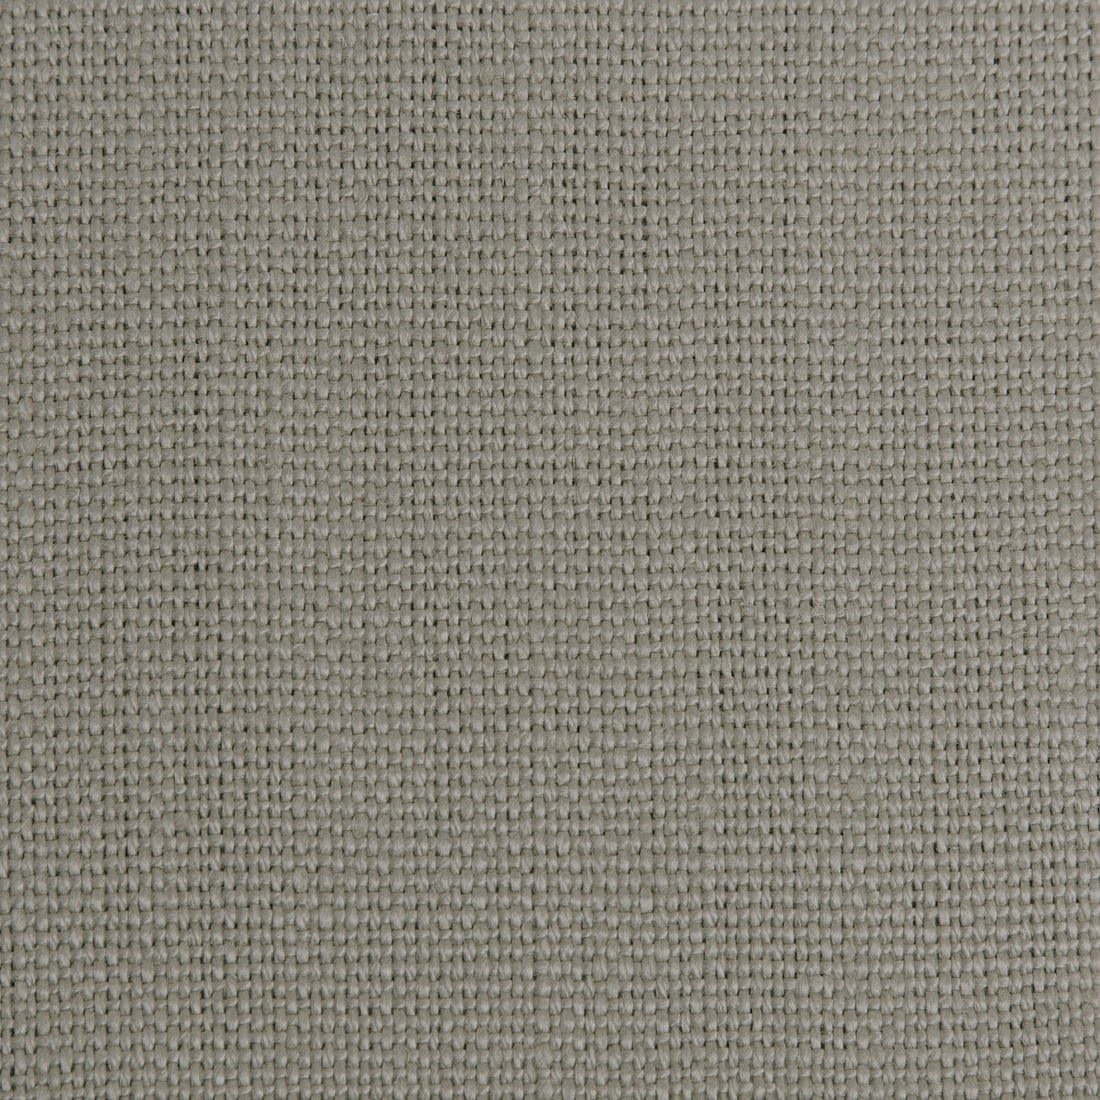 Stone Harbor fabric in dove color - pattern 27591.1660.0 - by Kravet Basics